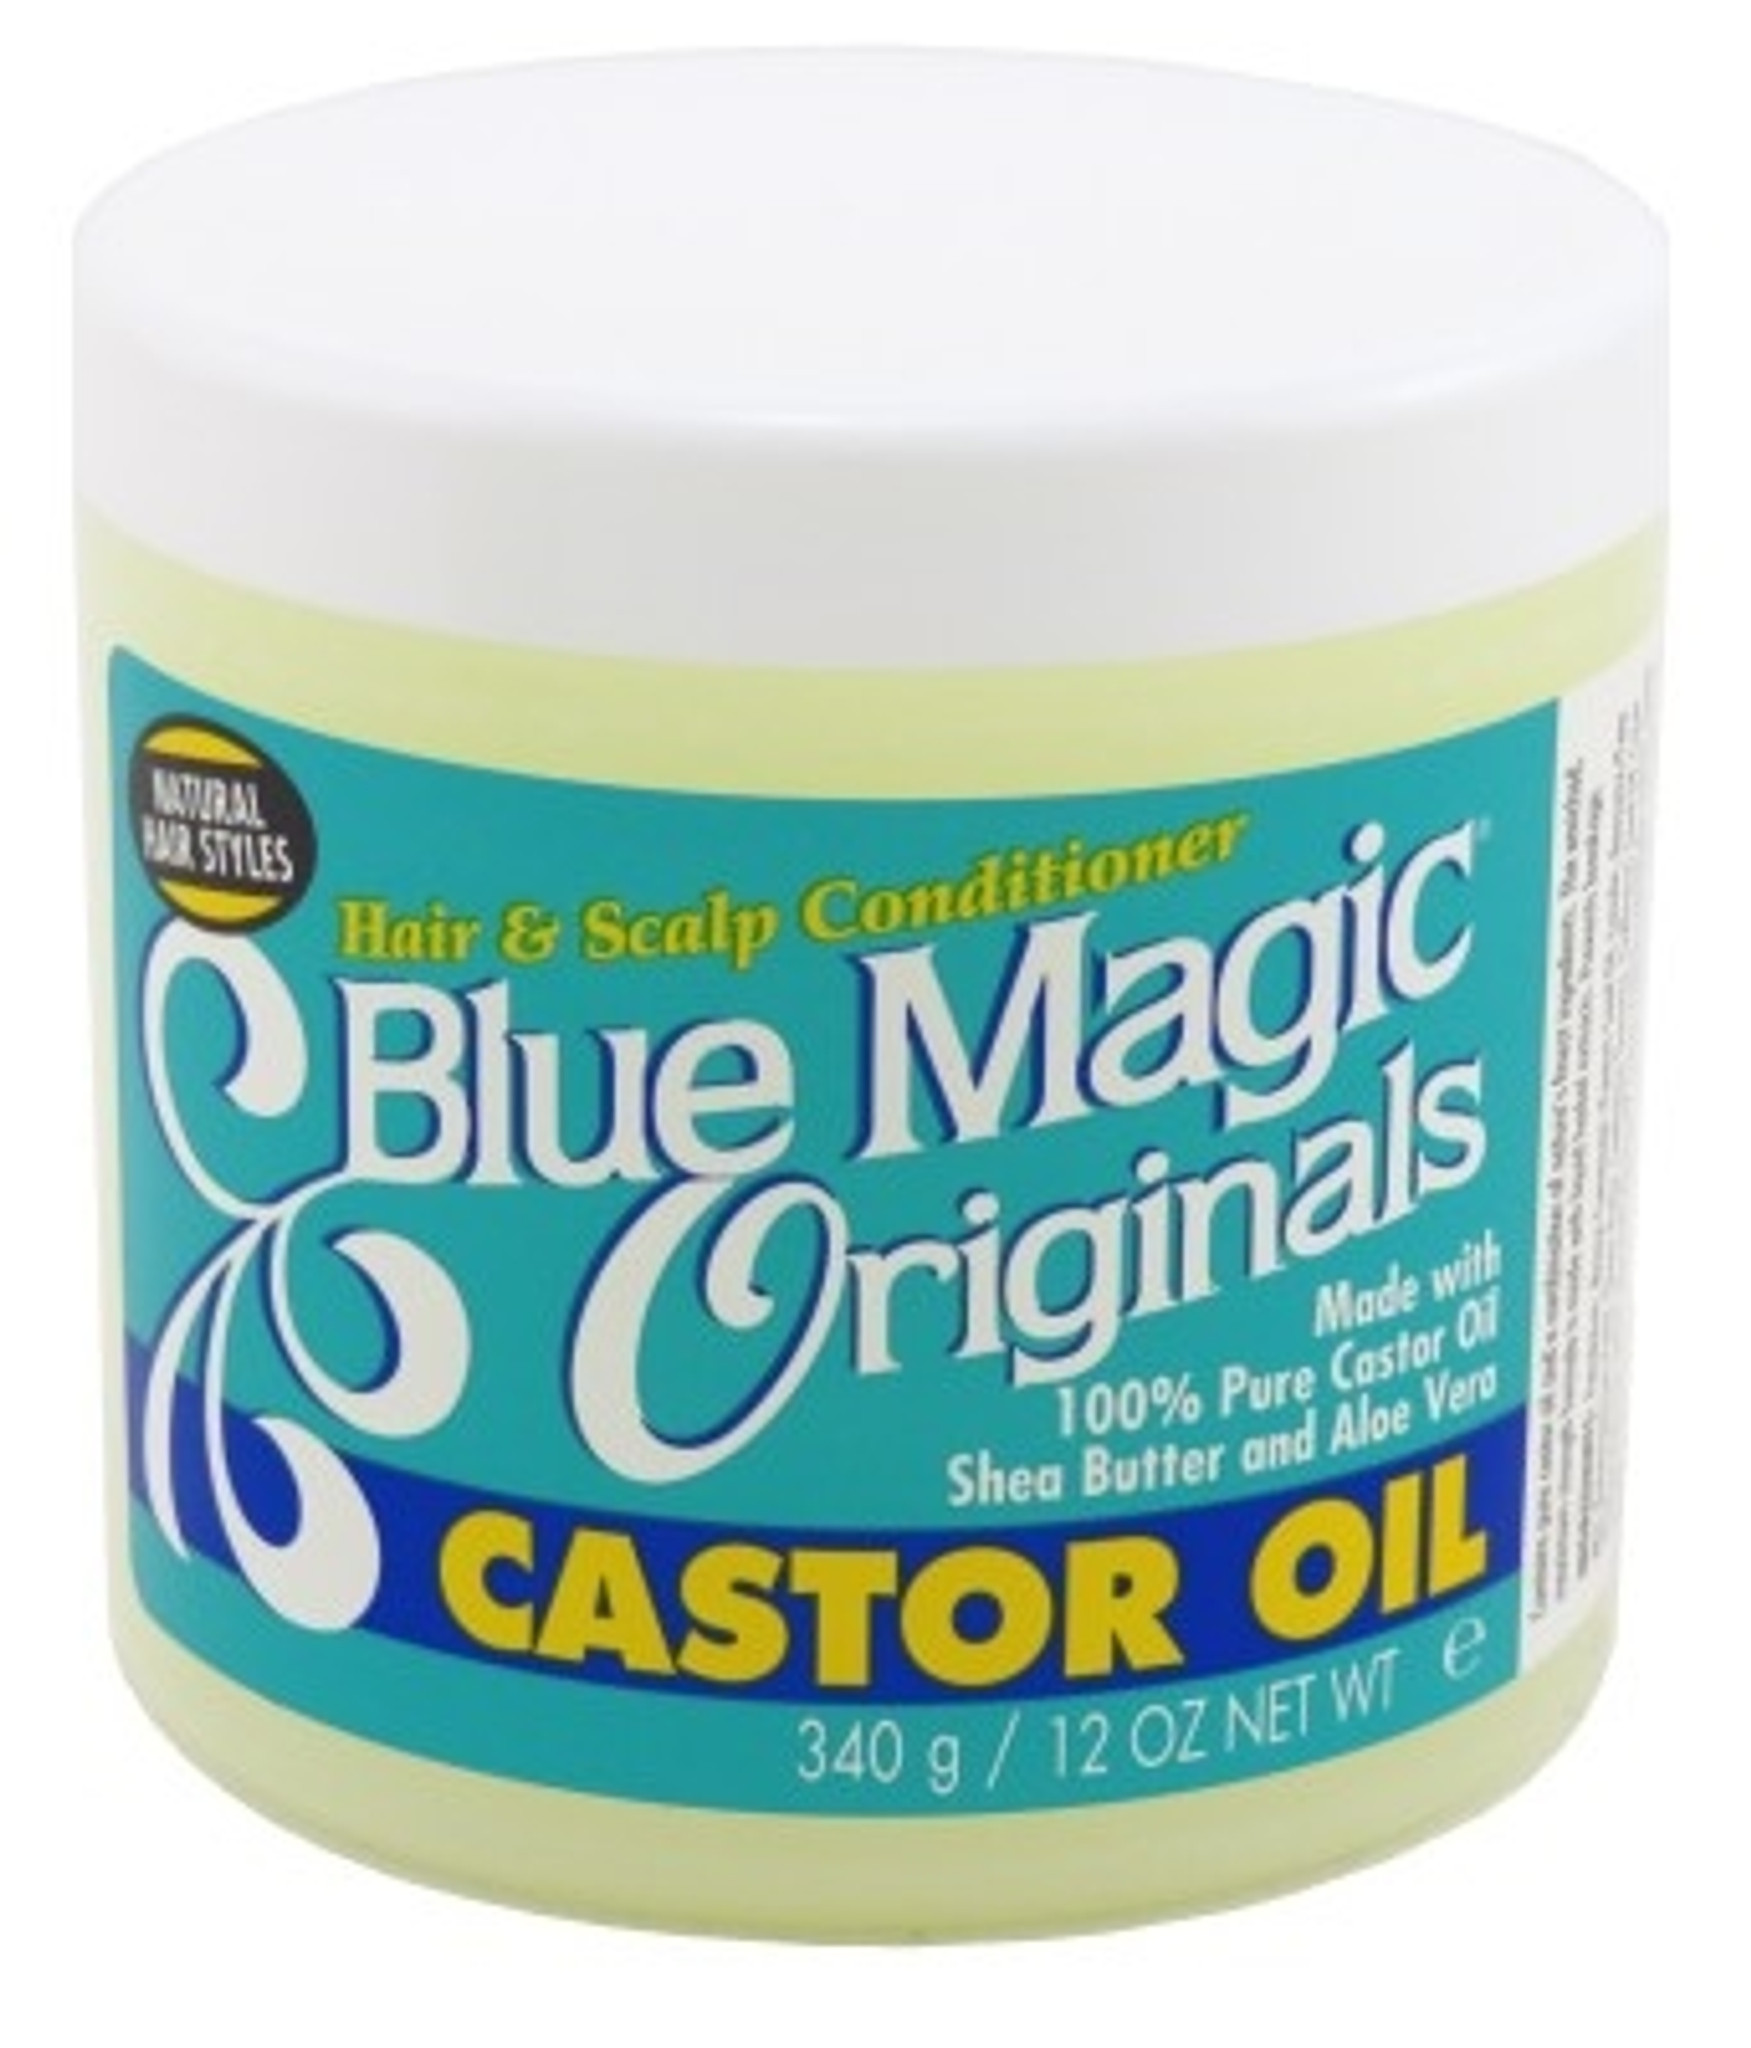 Blue Magic Conditioner Hair Dress, The Original, 12-Ounce Jar